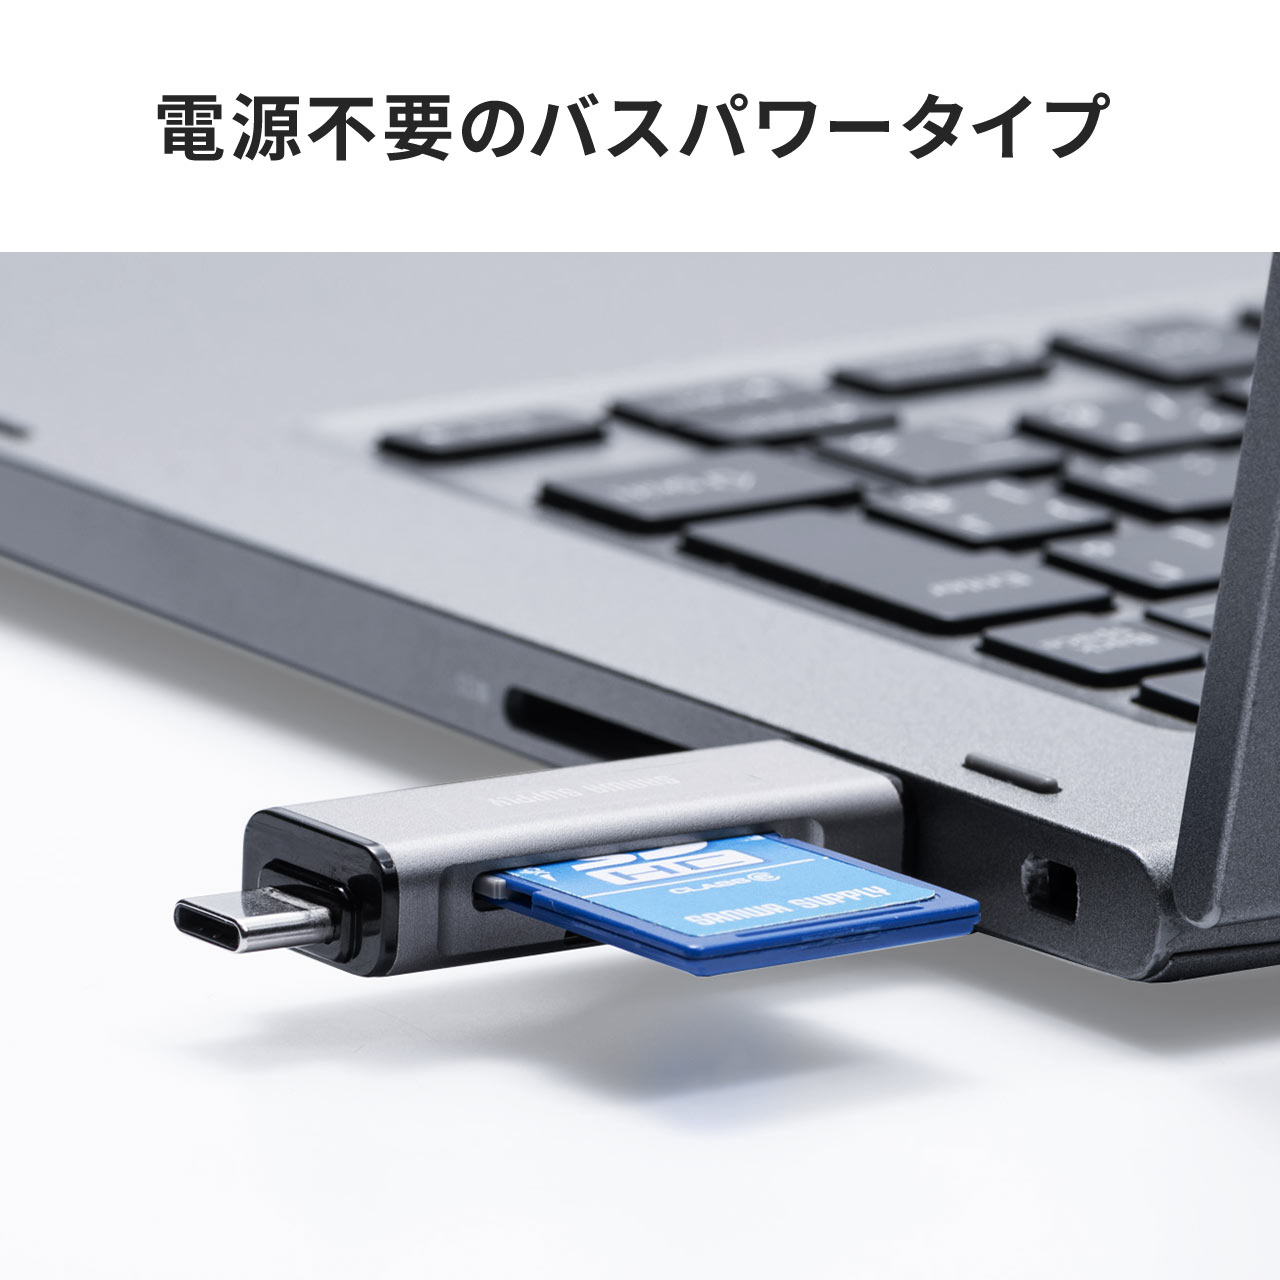 yGWZ[zfBAP[Xt SD/microSDJ[h[_[ USB 3.1 Gen1 USB A USB Type-Cڑ 400-ADR323GY